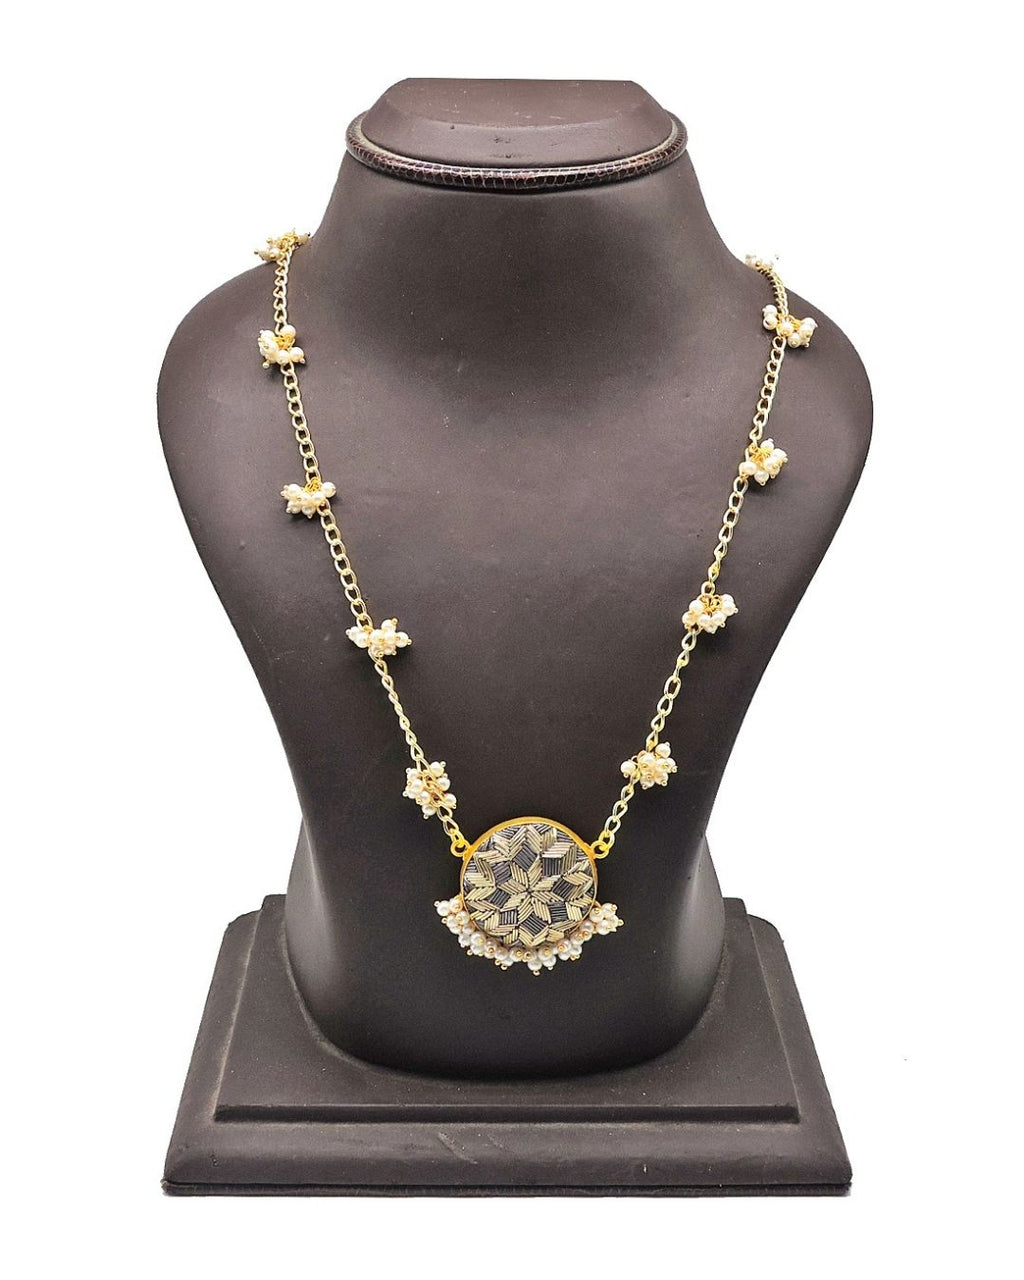 Zardosi Star Necklace - Necklaces - Handcrafted Jewellery - Made in India - Dubai Jewellery, Fashion & Lifestyle - Dori